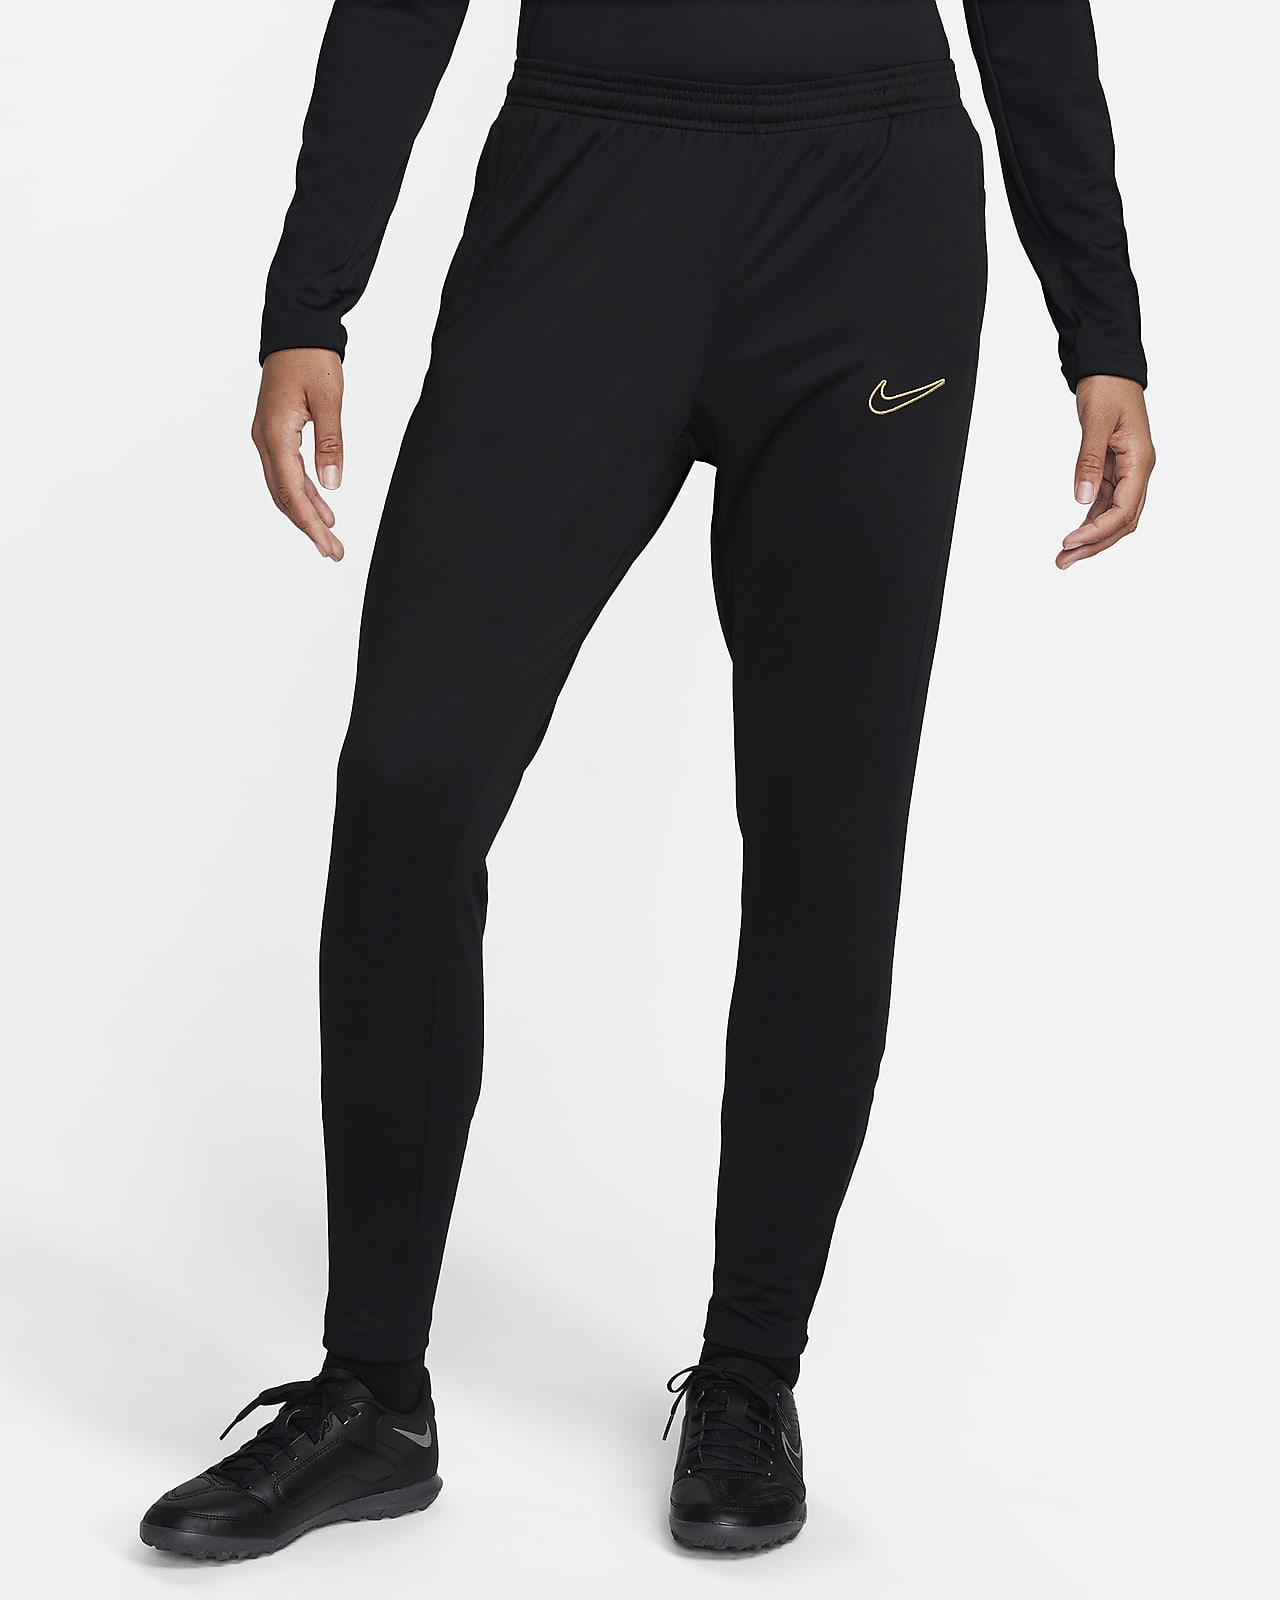 Nike Men's Dri-FIT Academy Pro Pants - DH9240-451 - Navy